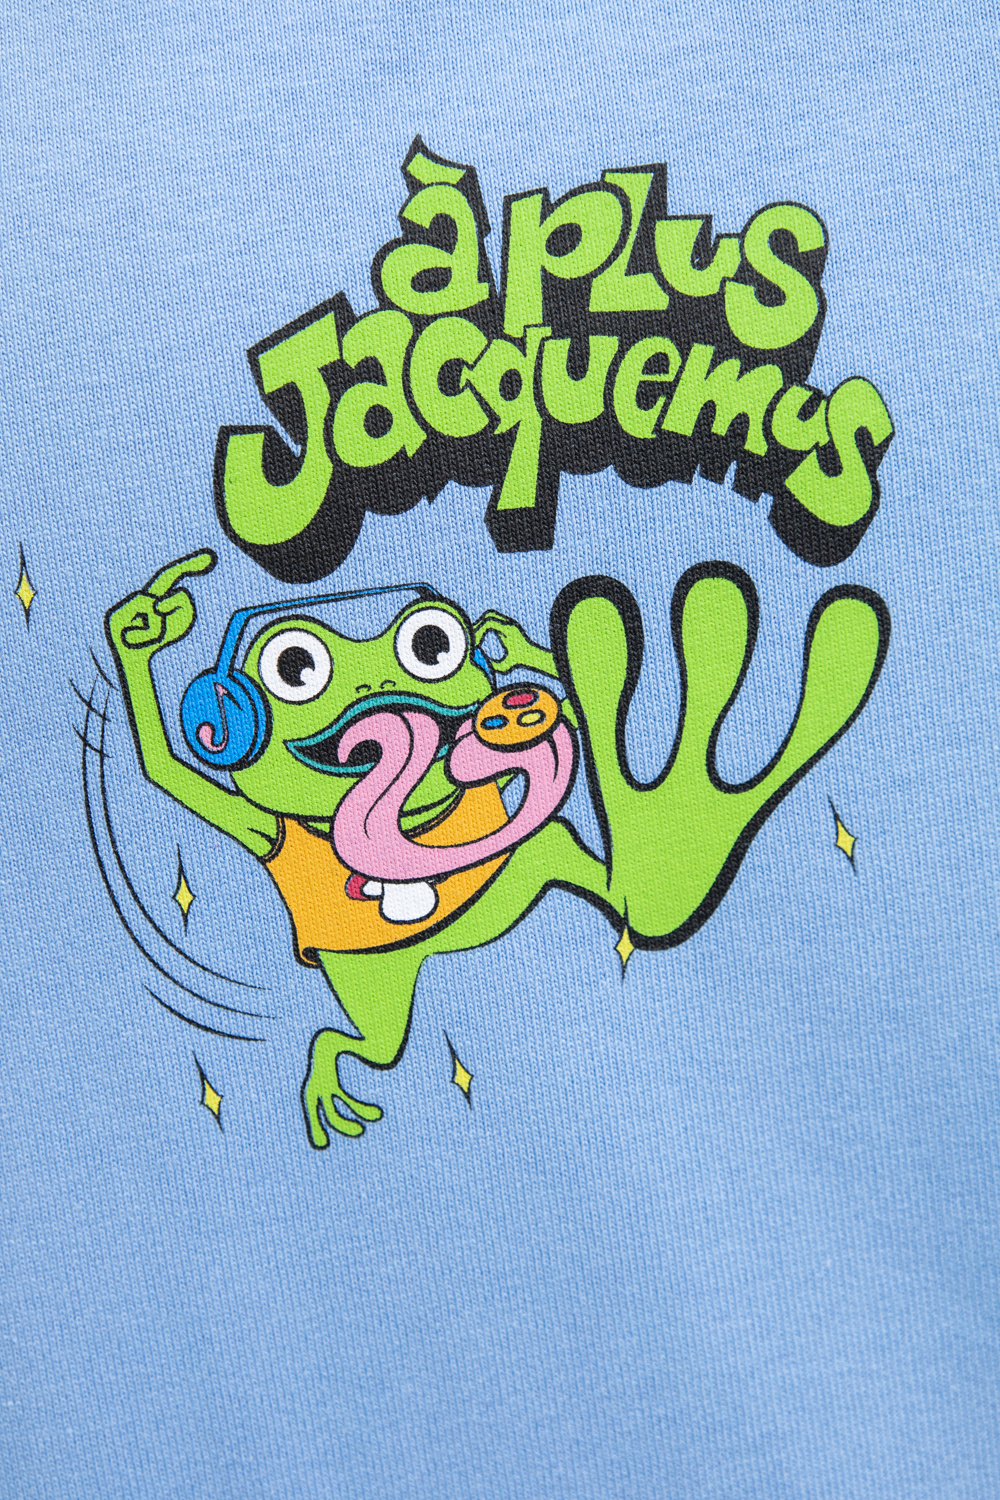 Jacquemus ‘Grenouille’ printed T-shirt